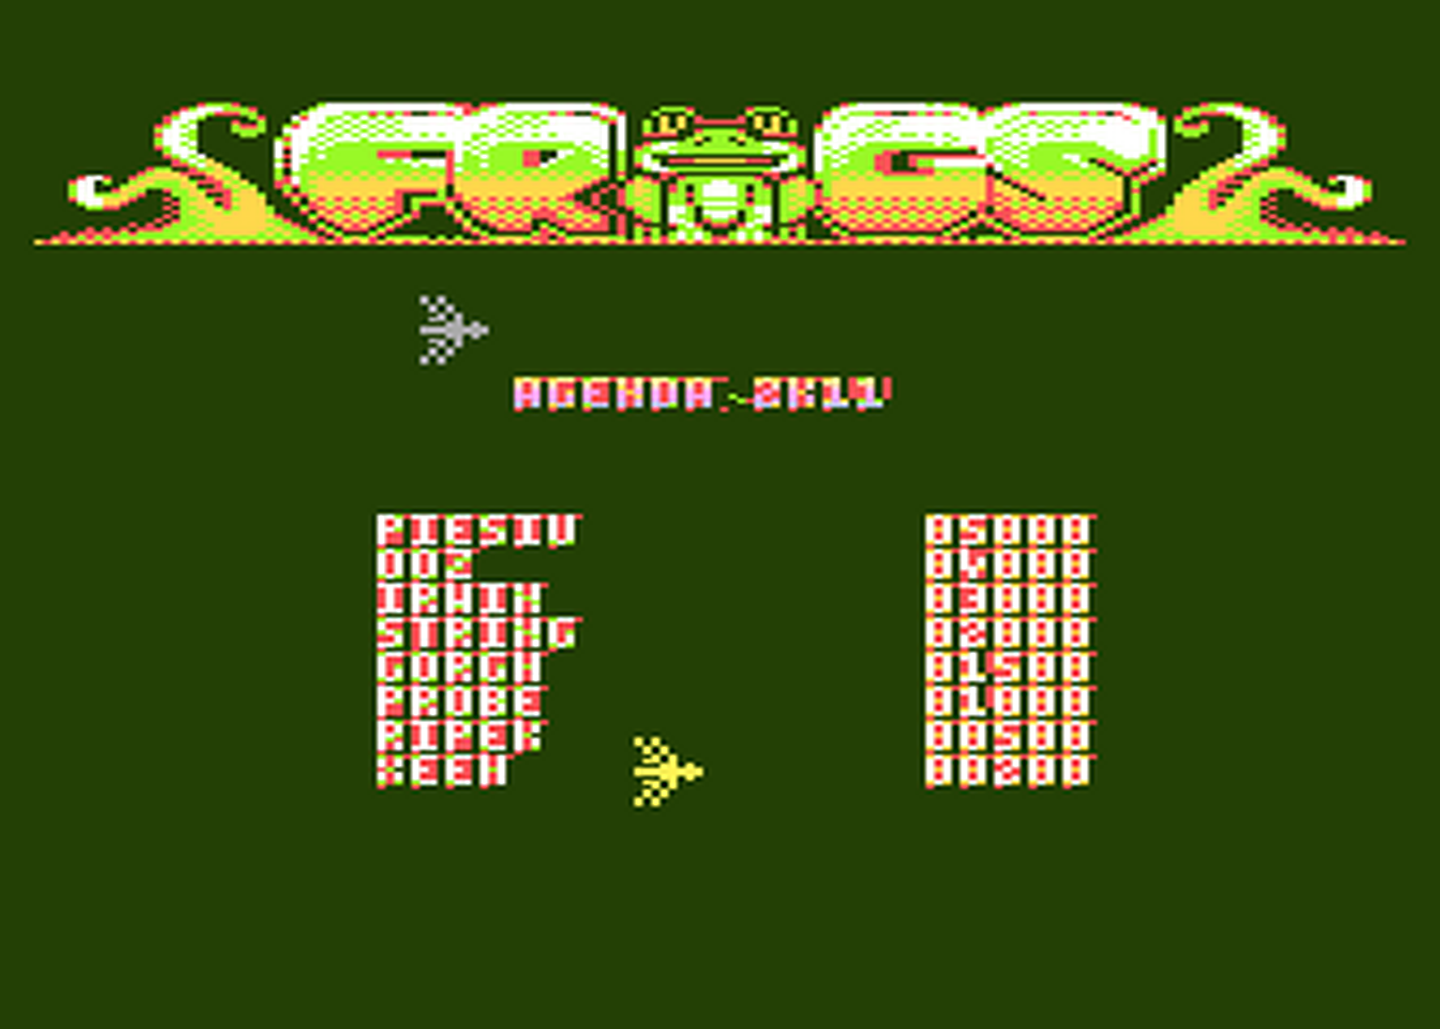 Atari GameBase Frogs Agenda 2011